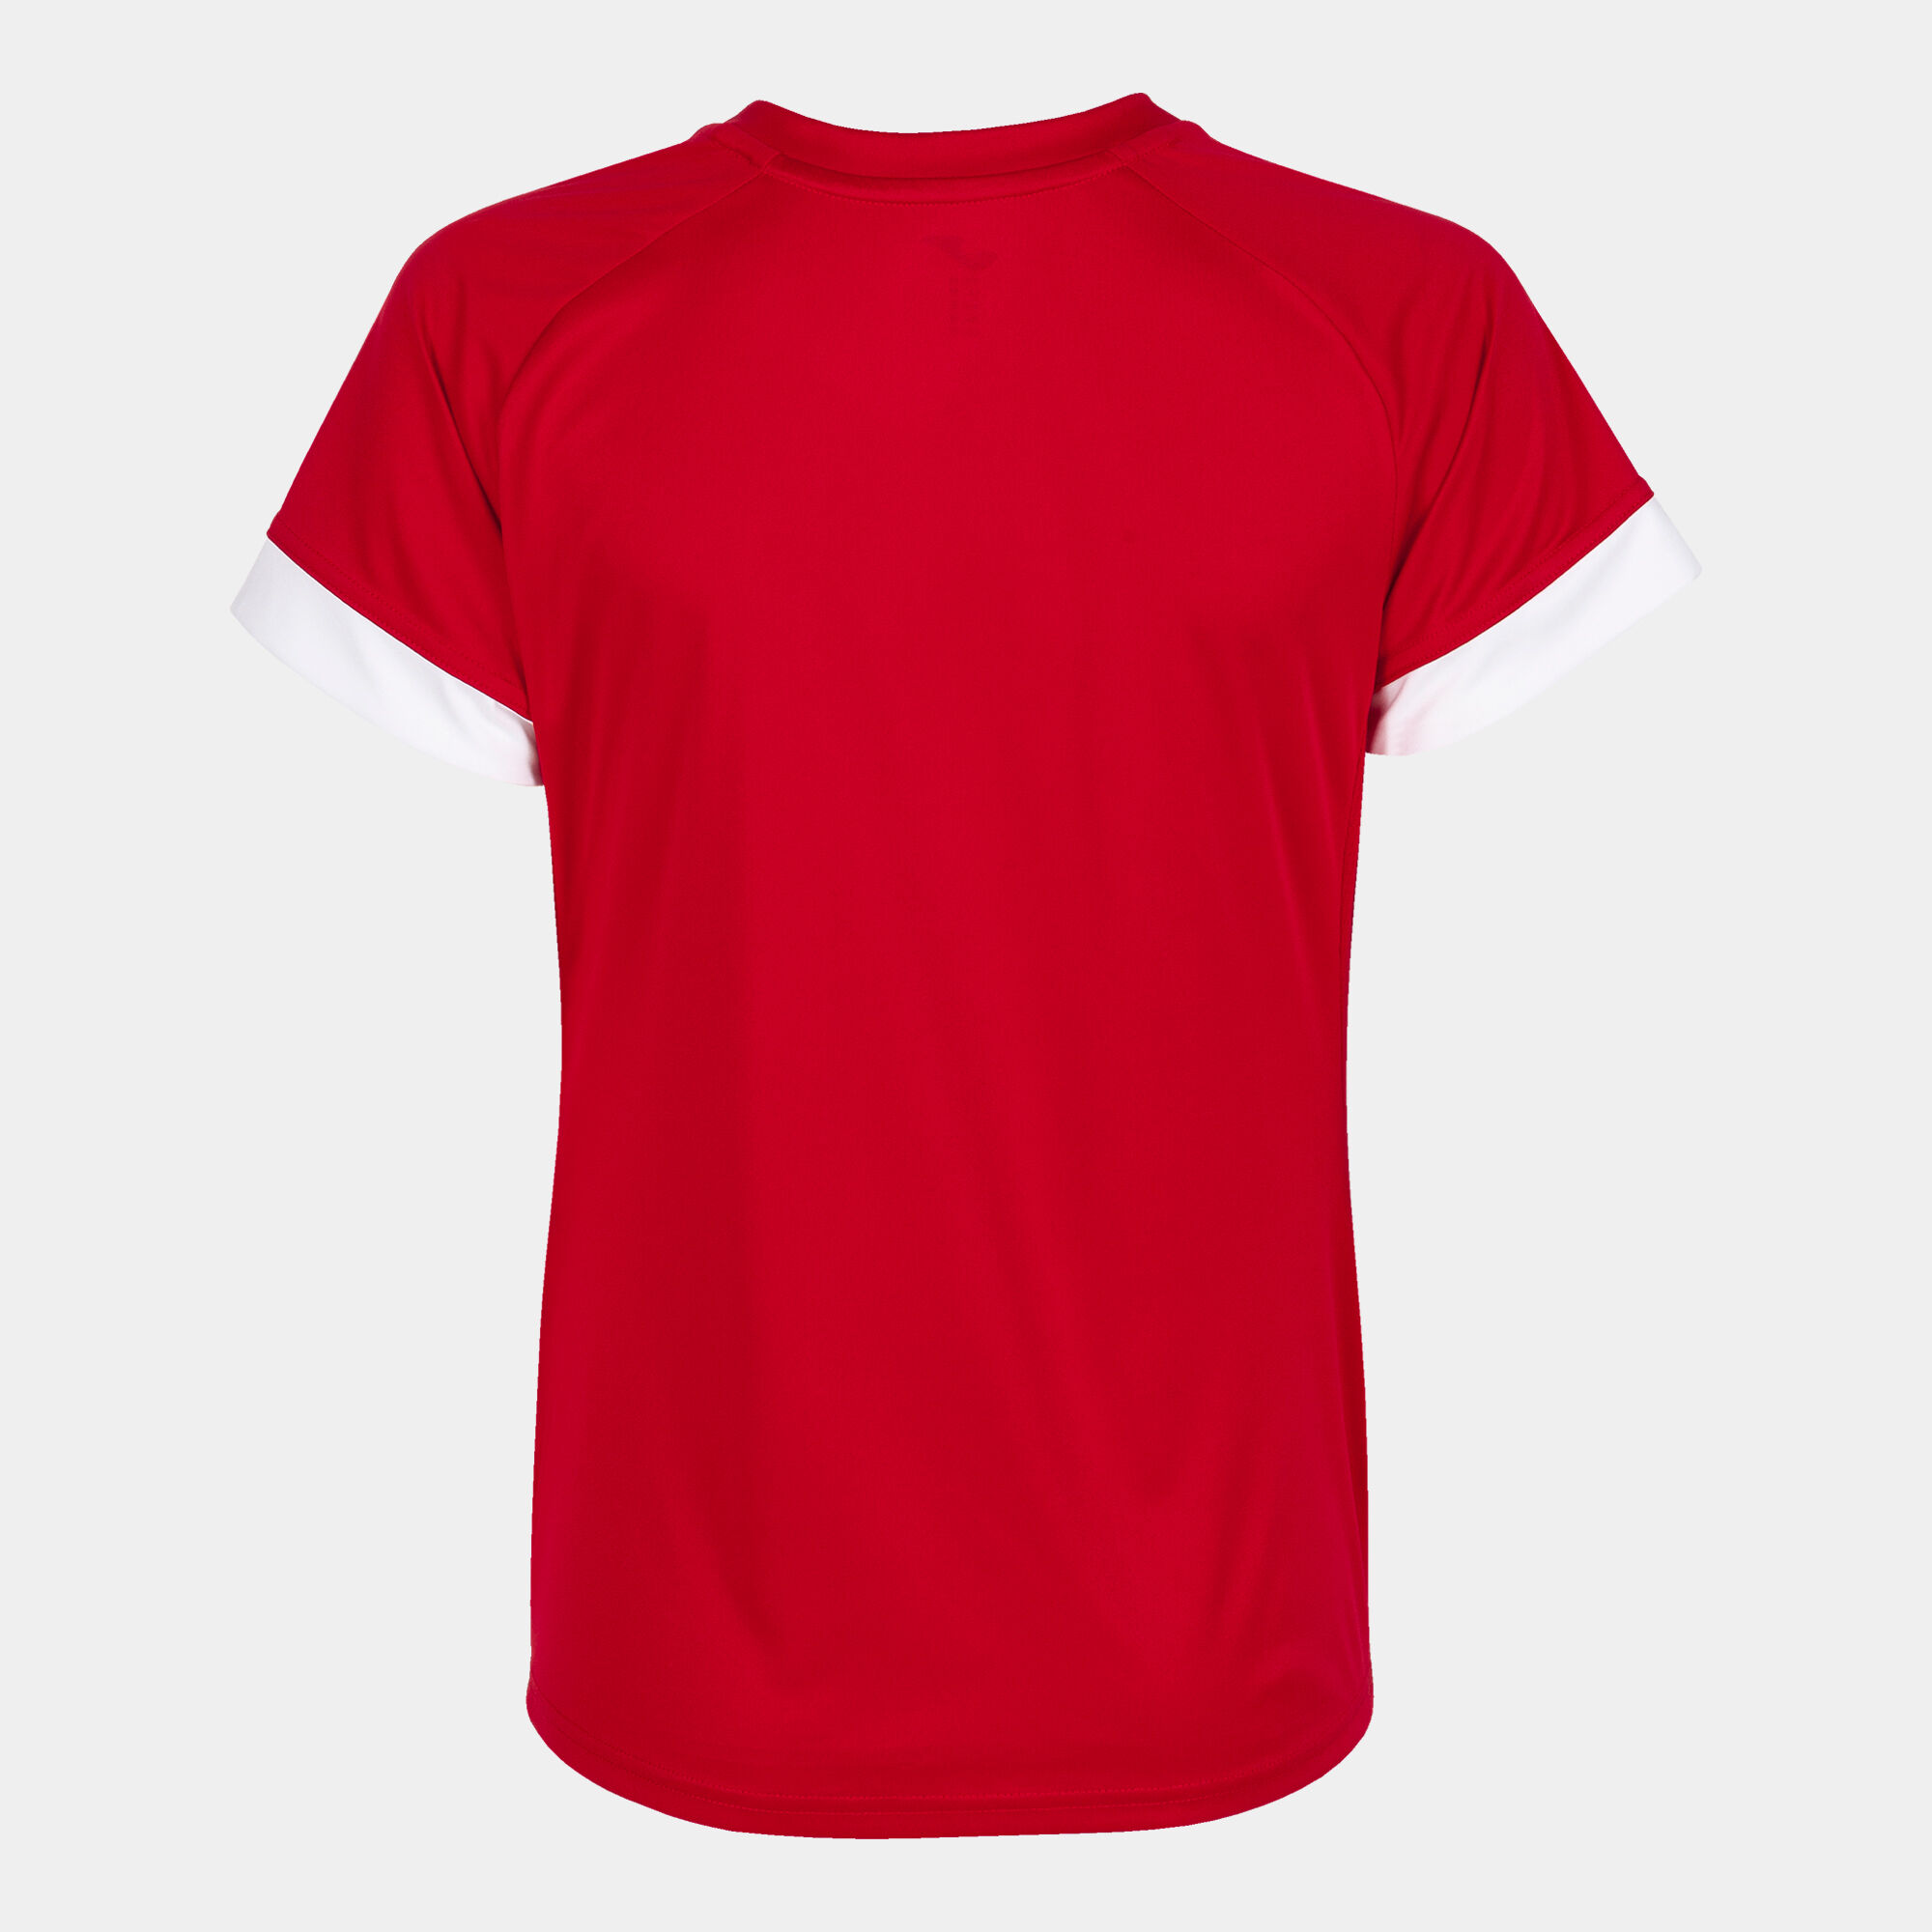 Camiseta manga corta mujer Supernova III rojo blanco